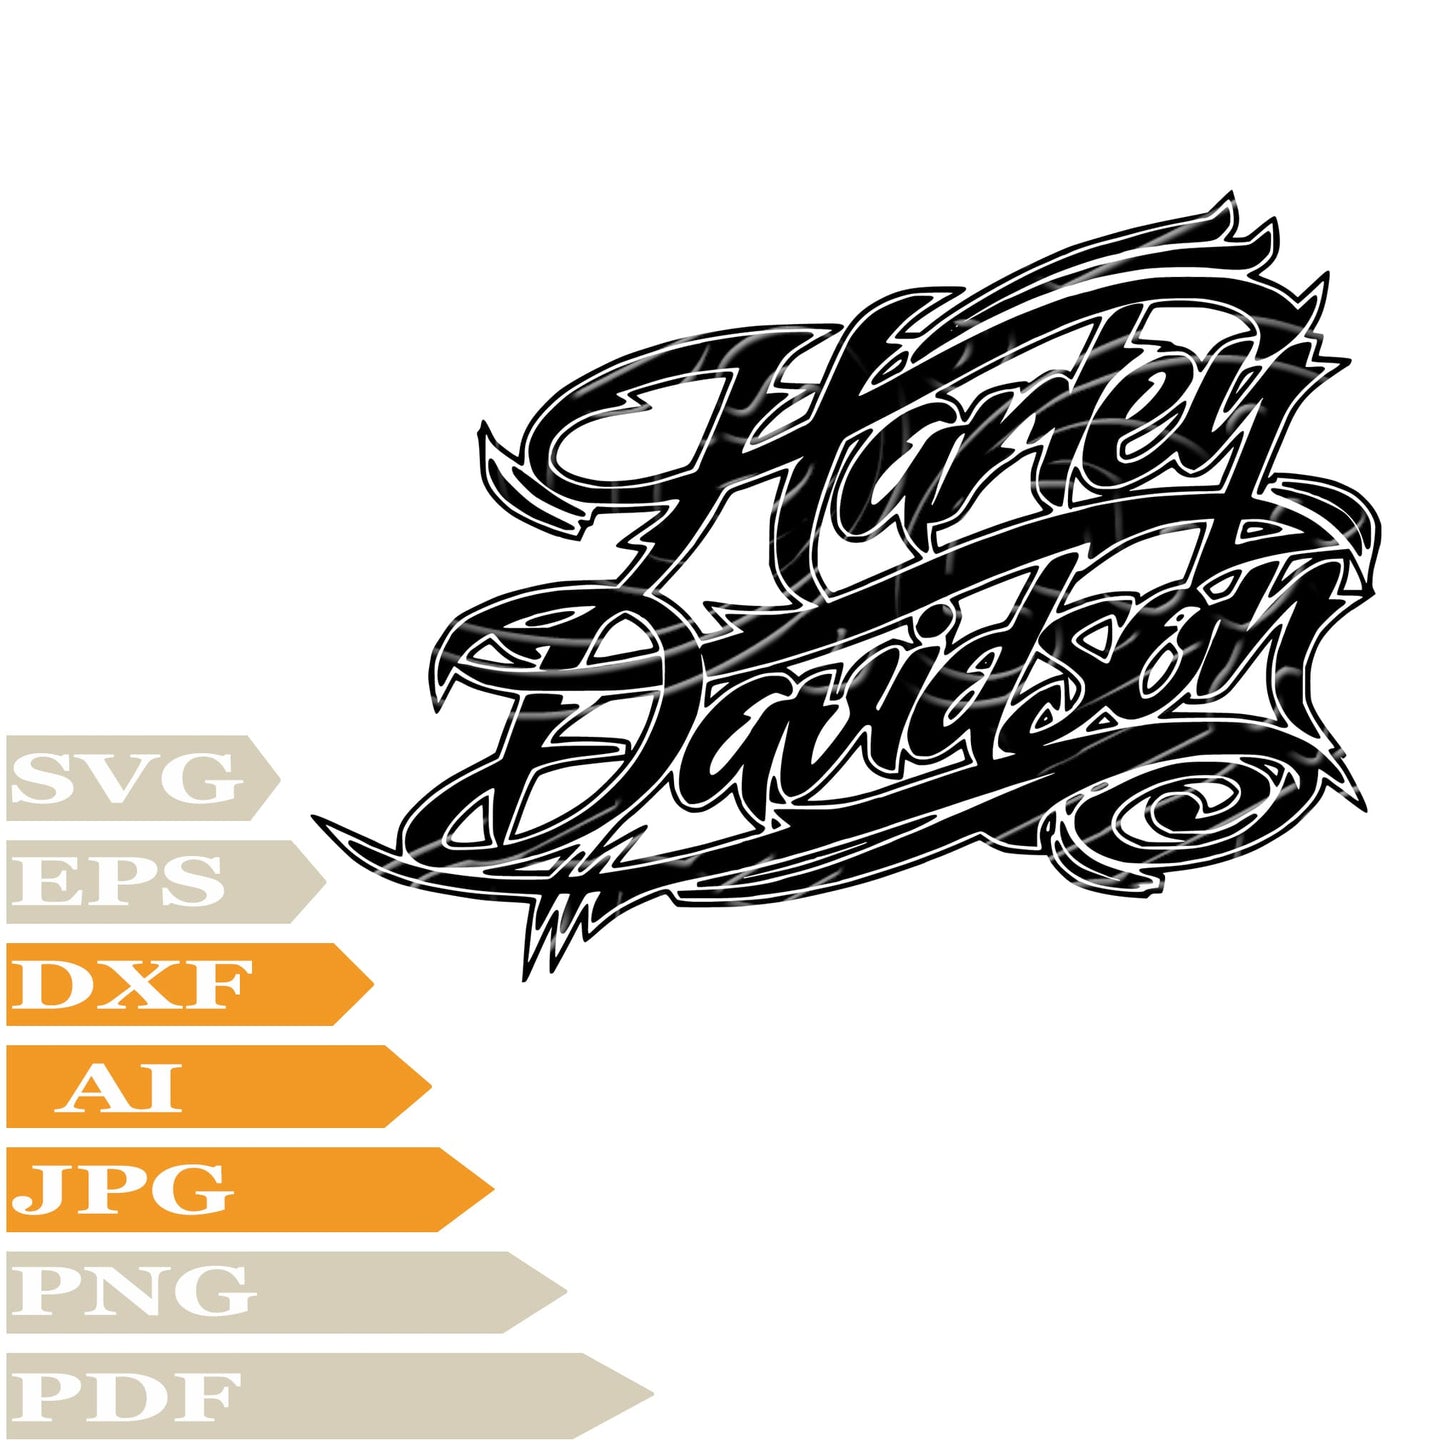 Skull Harley Davidson,Harley Davidson Logo Svg File, Image Cut, Png, For Tattoo, Silhouette, Digital Vector Download, Cut File, Clipart, For Cricut